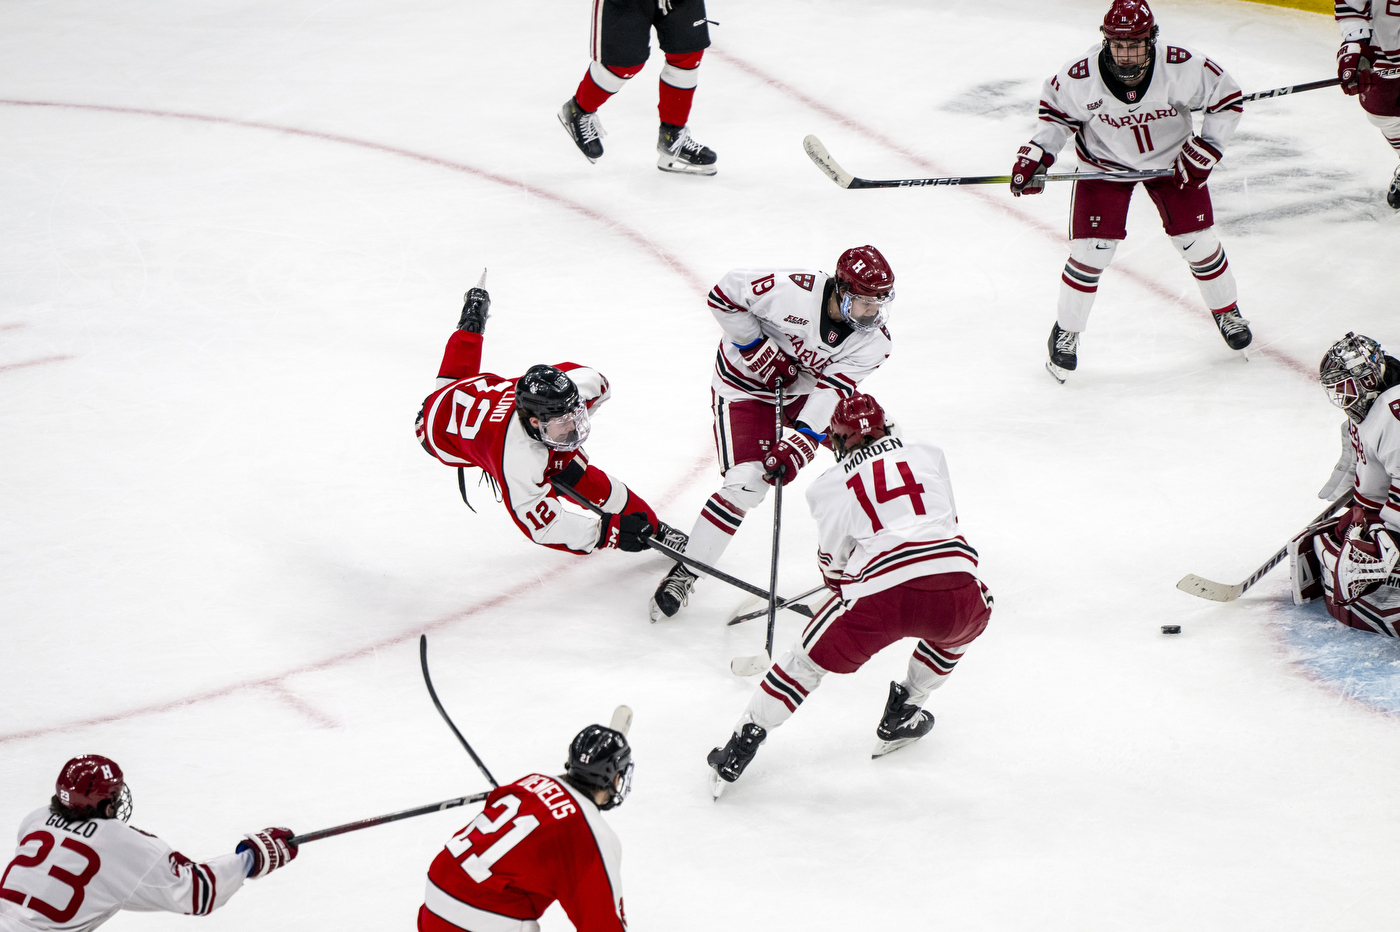 Northeastern hockey player shooting on Harvard's net.